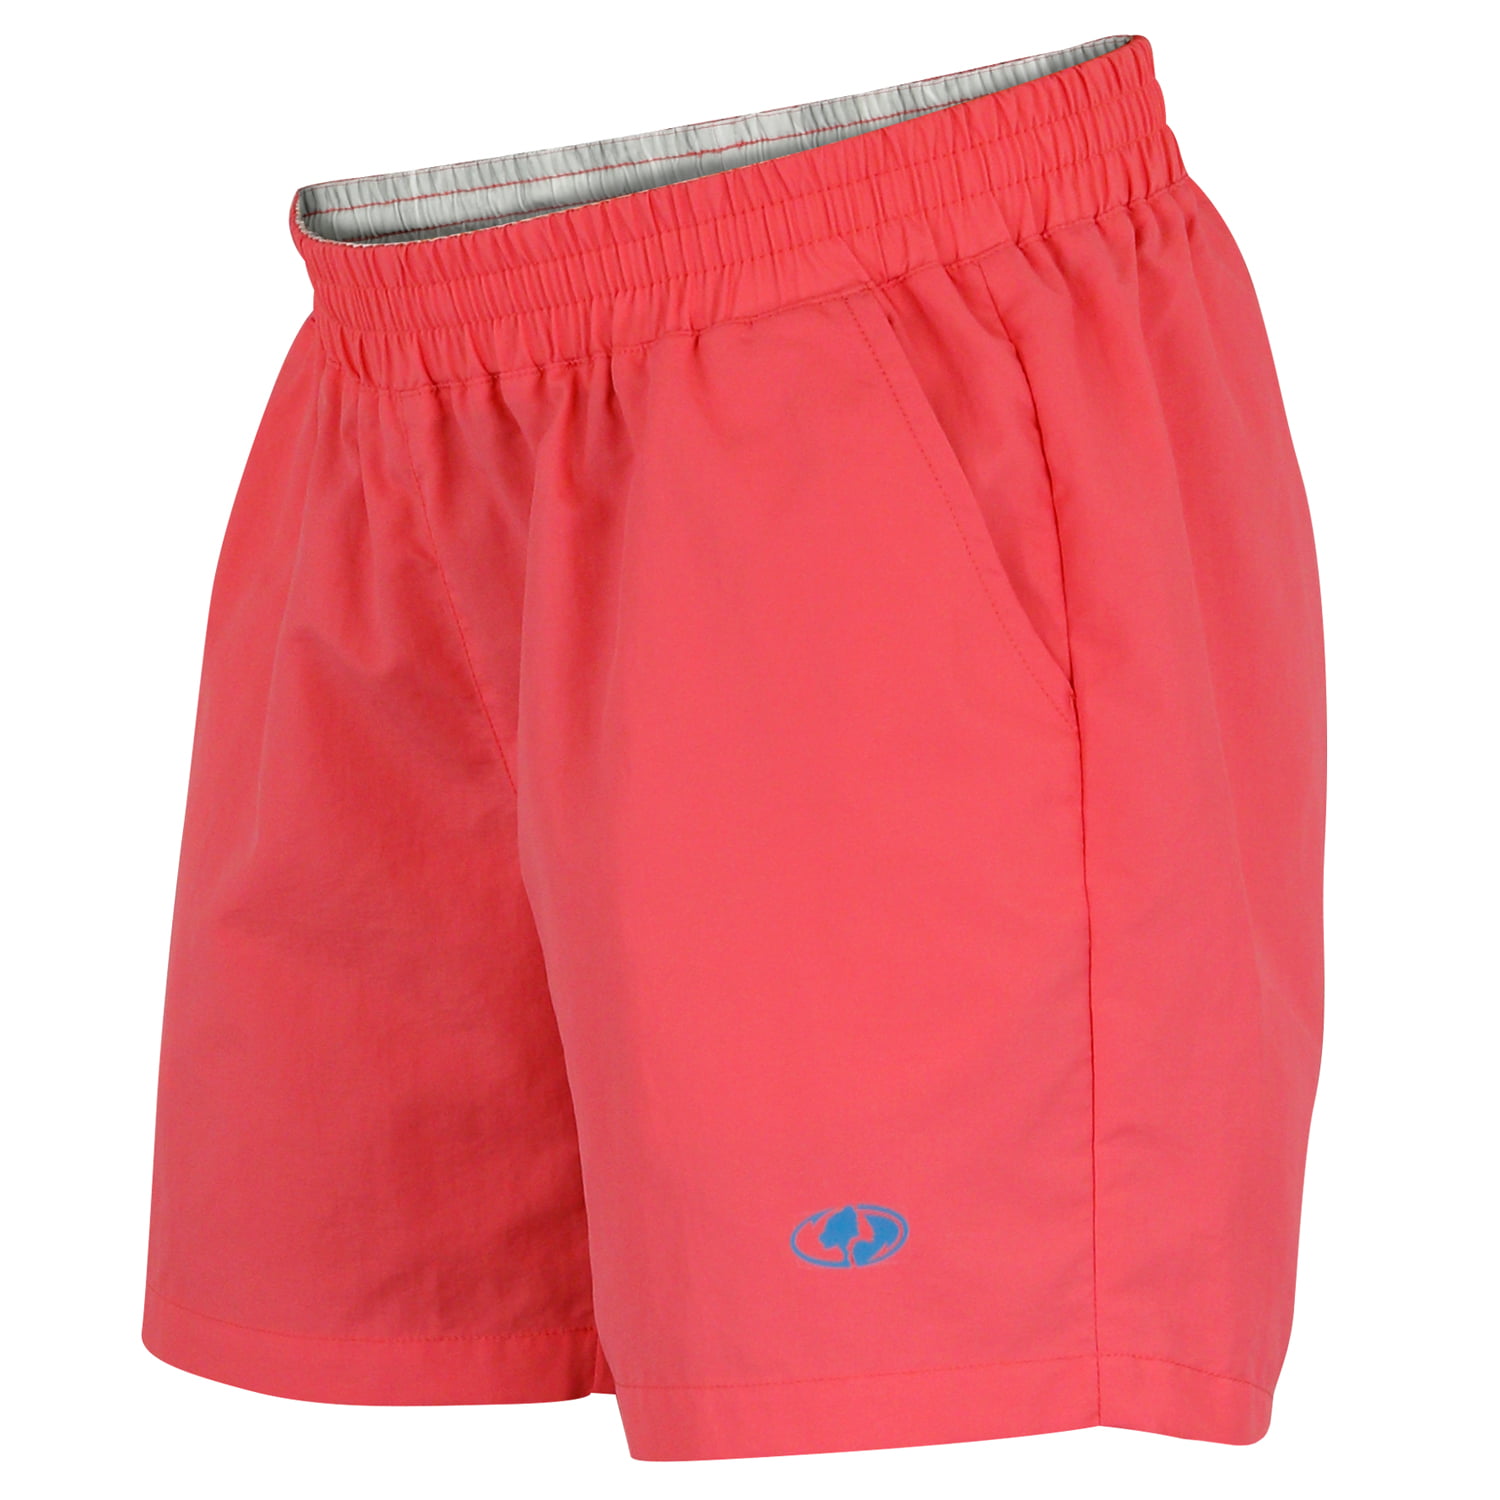 Mossy Oak Women's Workout Shorts with Pockets